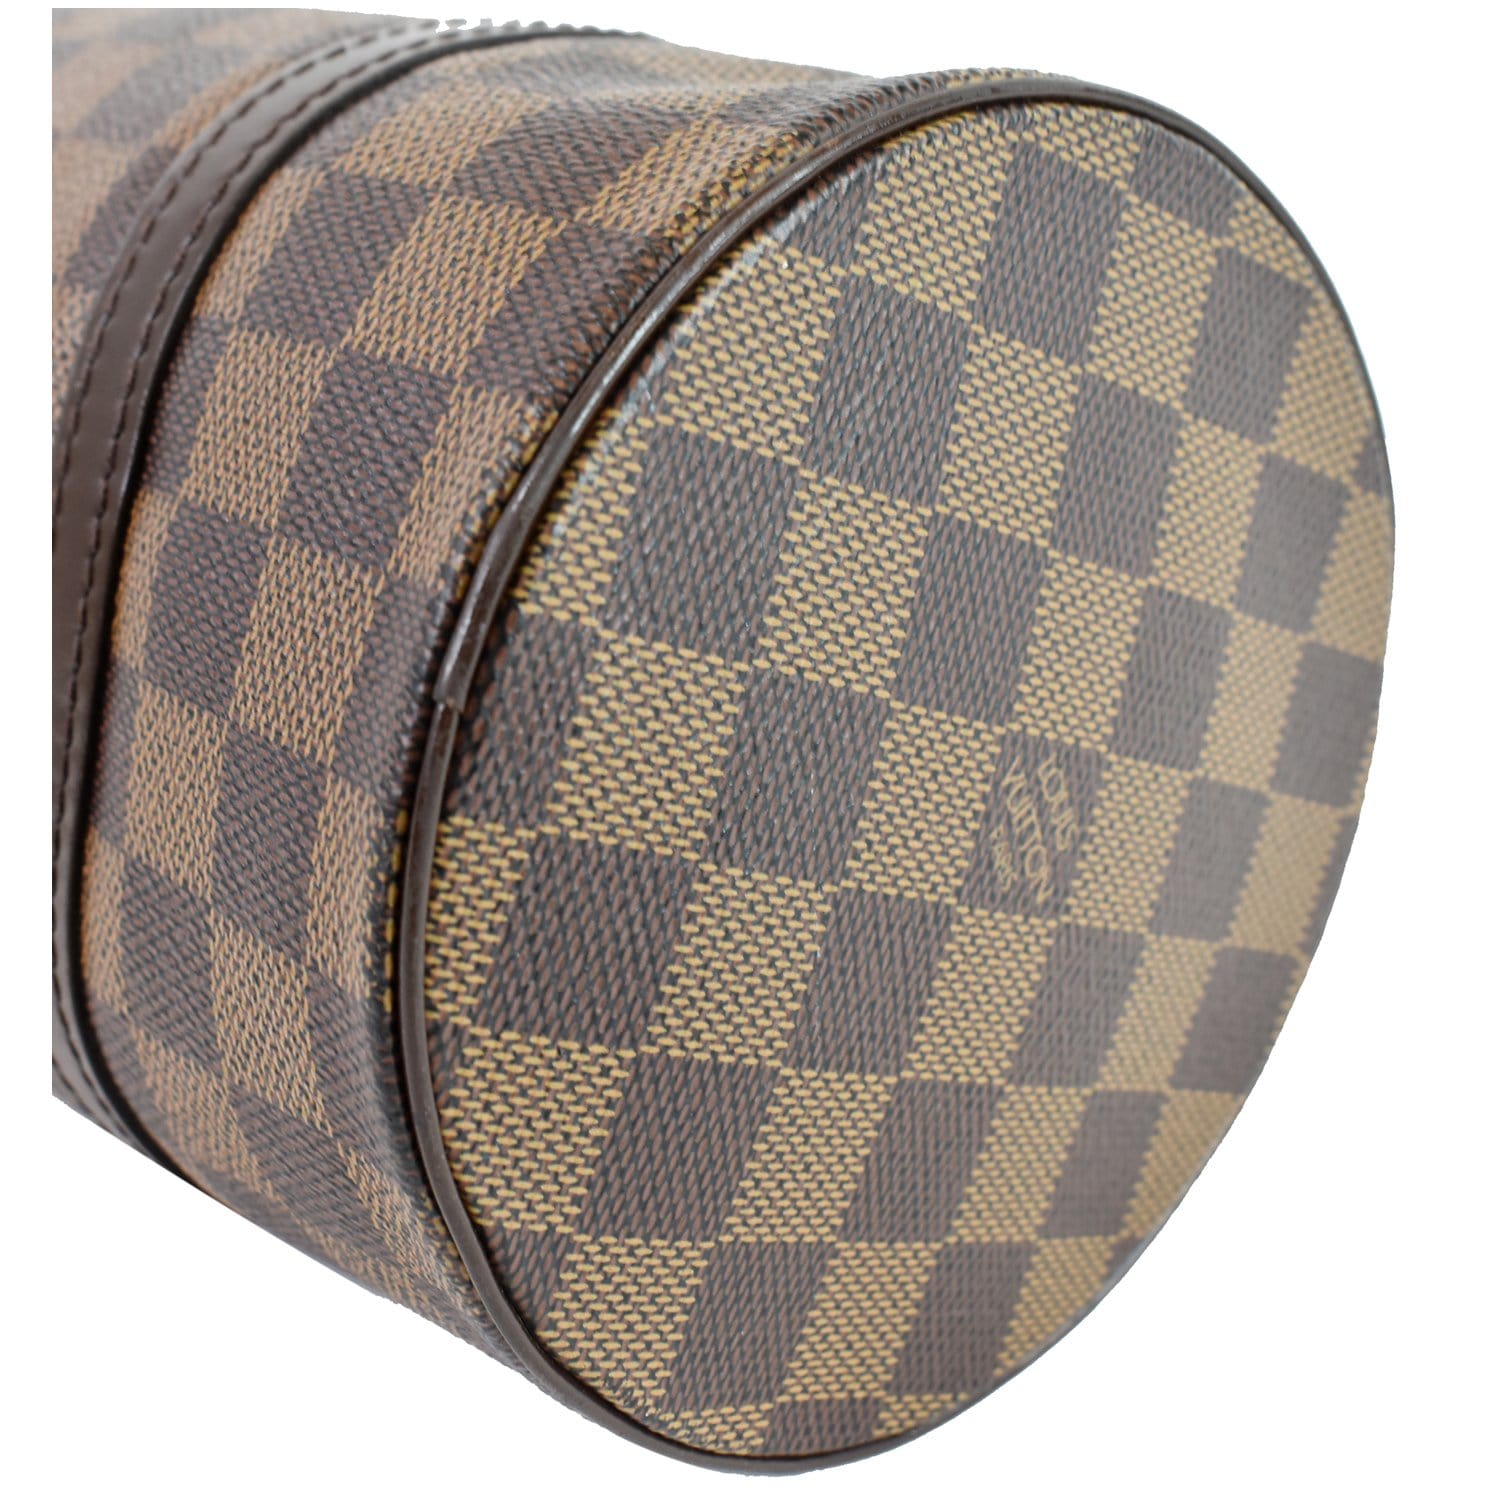 Shop for Louis Vuitton Damier Ebene Canvas Leather Papillon 26 cm Bag -  Shipped from USA